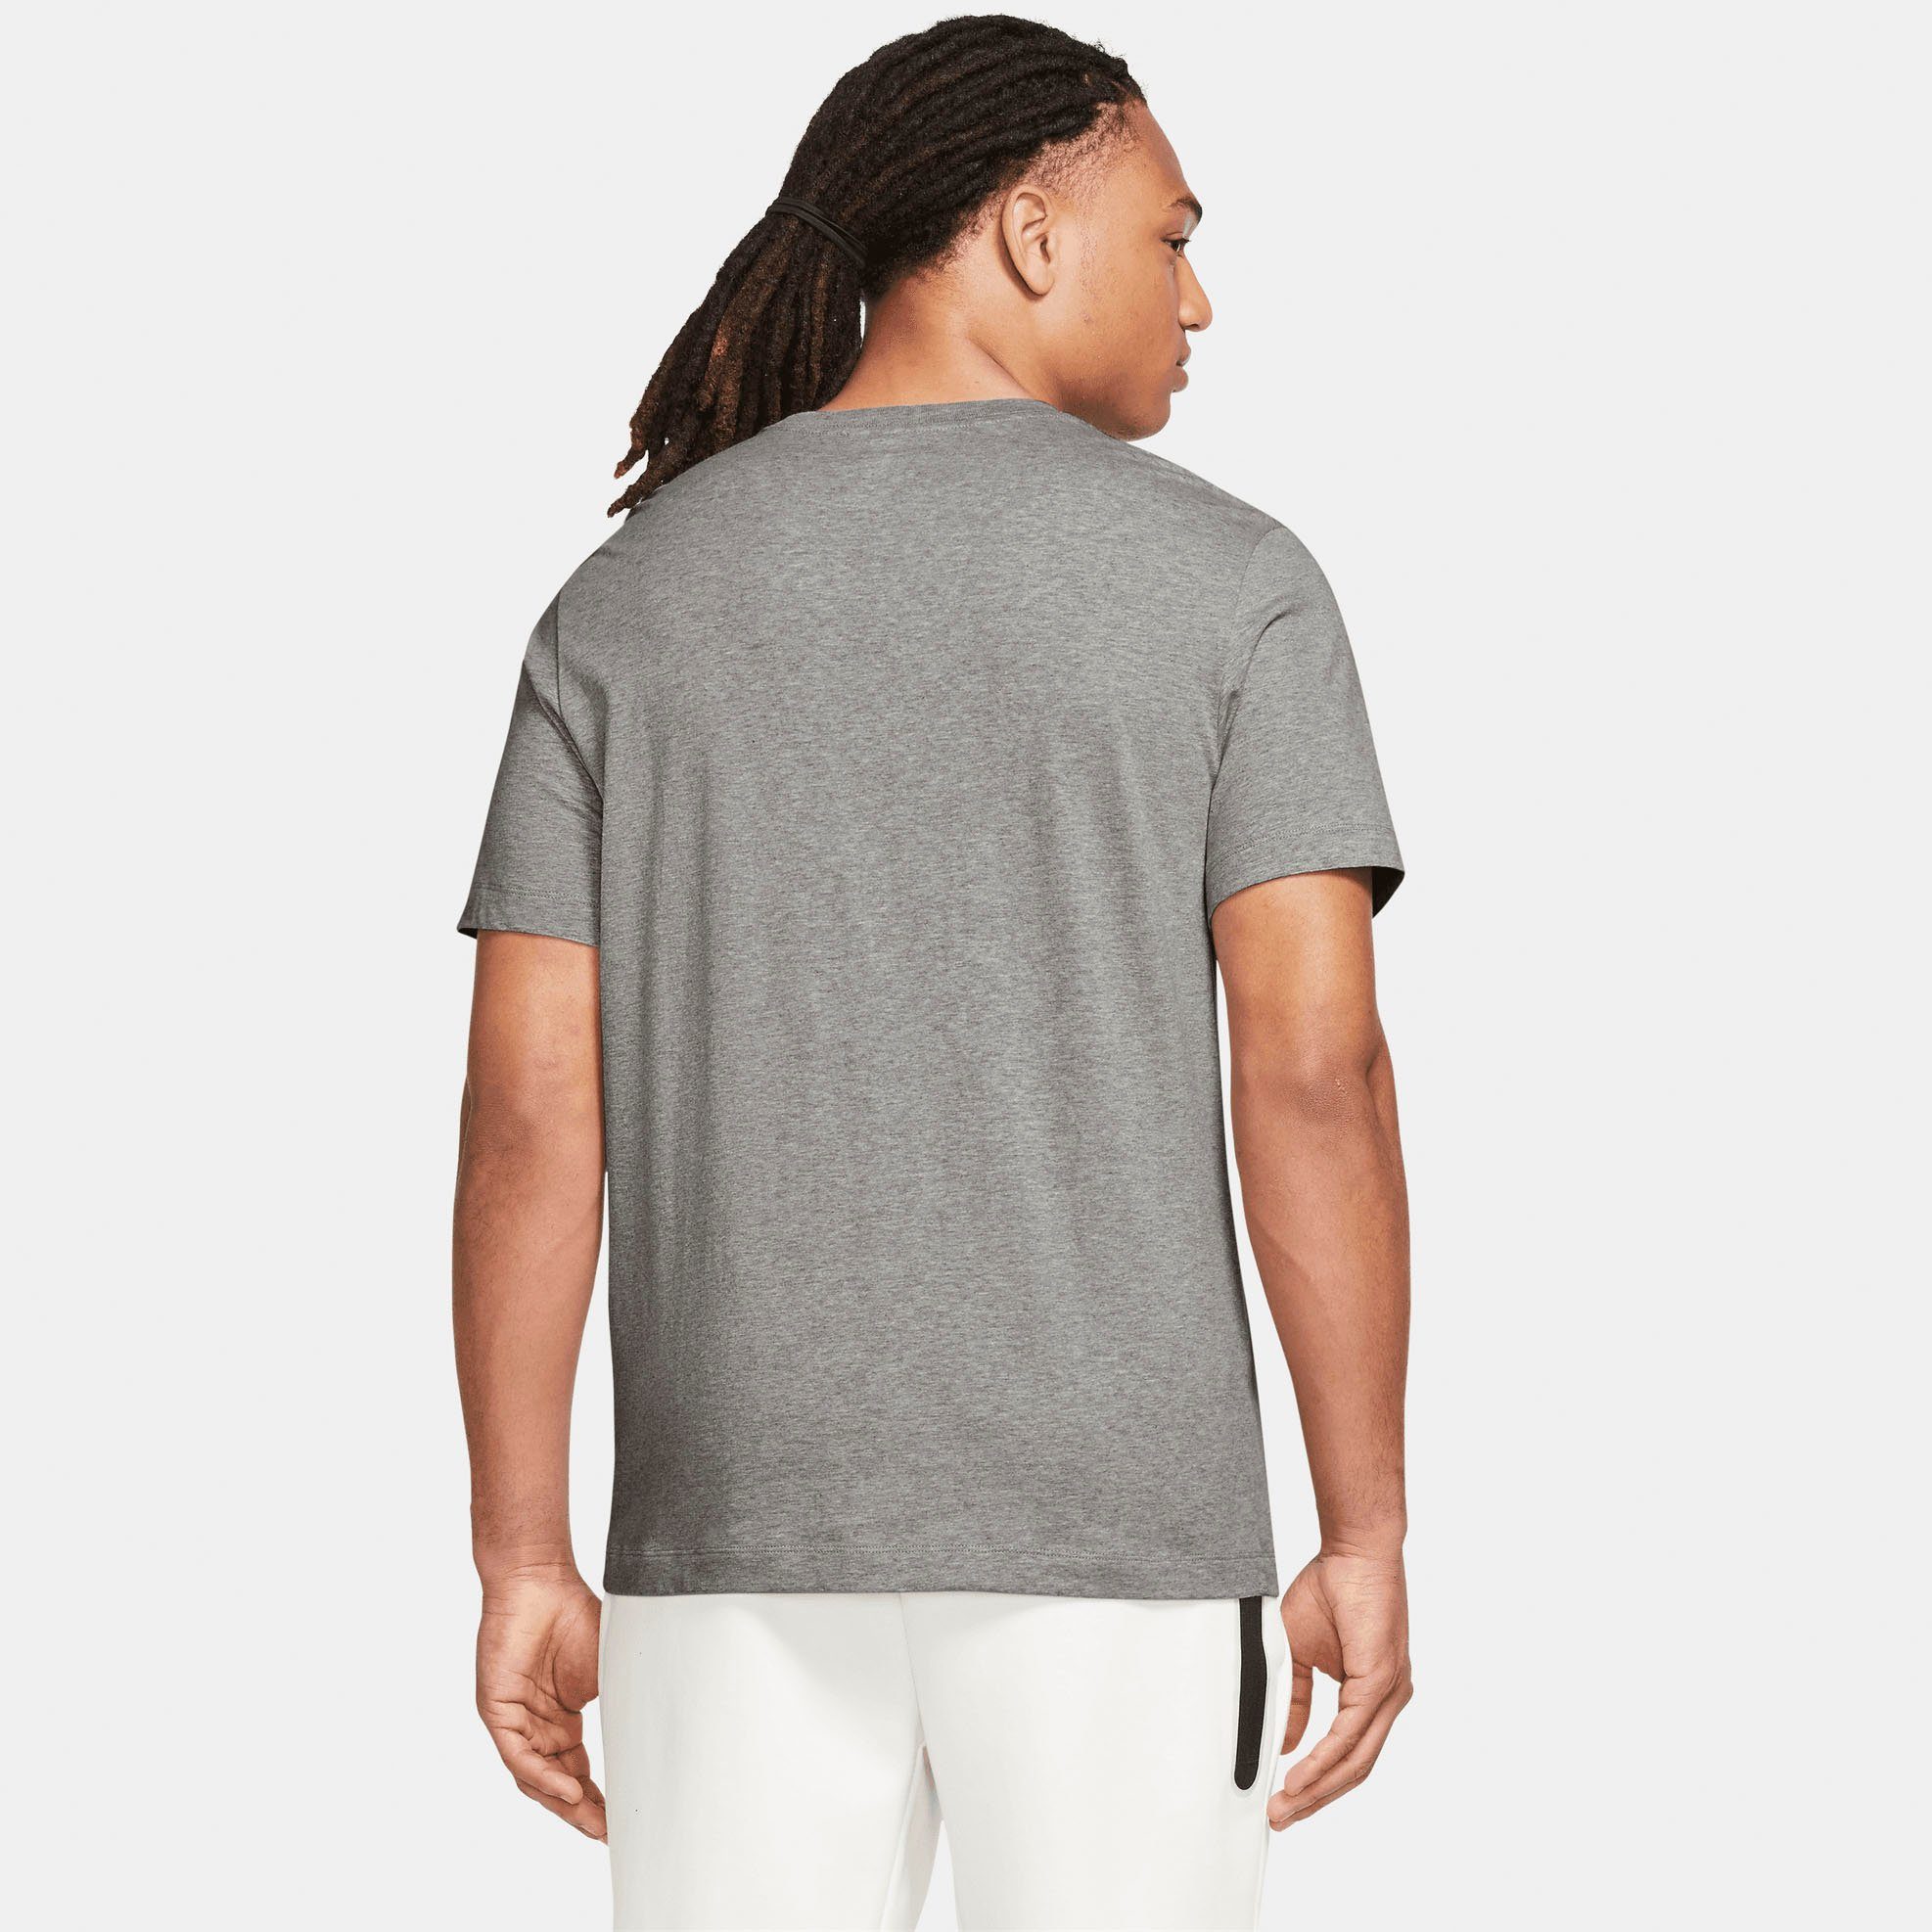 Nike GREY T-Shirt HEATHER T-Shirt Men's DK Sportswear